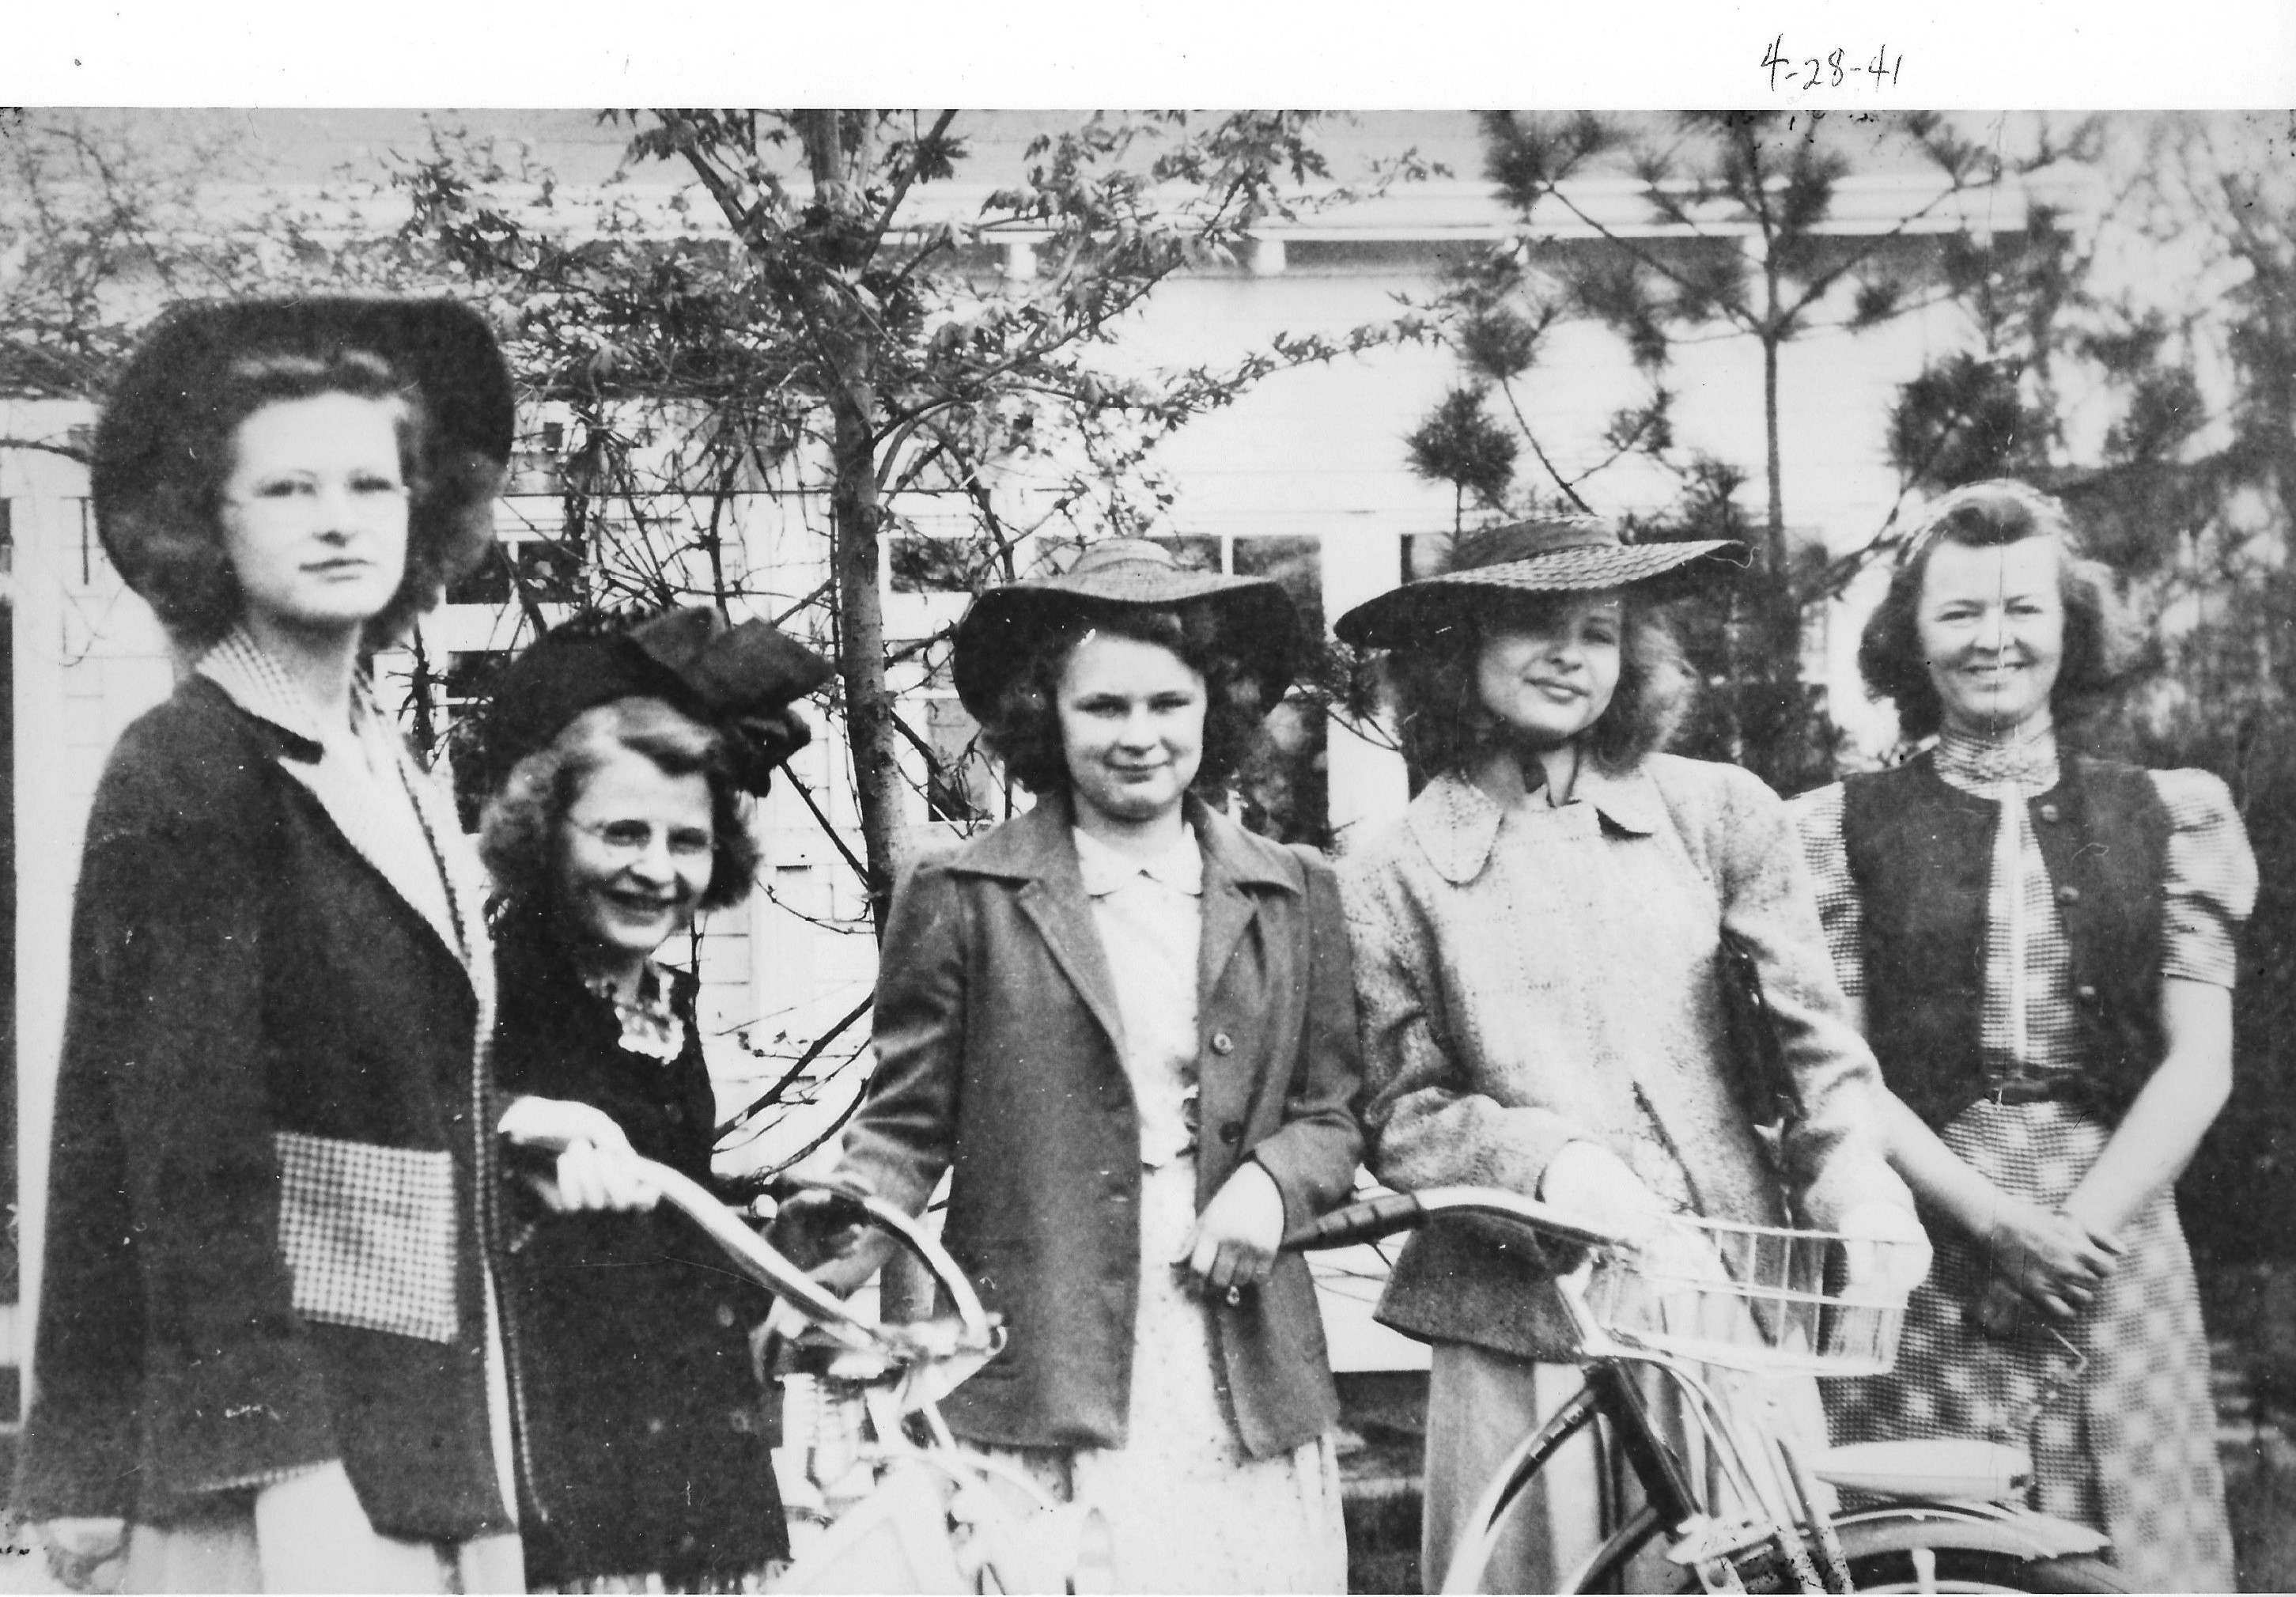 Yvonne, Patsy, Jean Billie, Phyllis Linderman, April 28, 1941